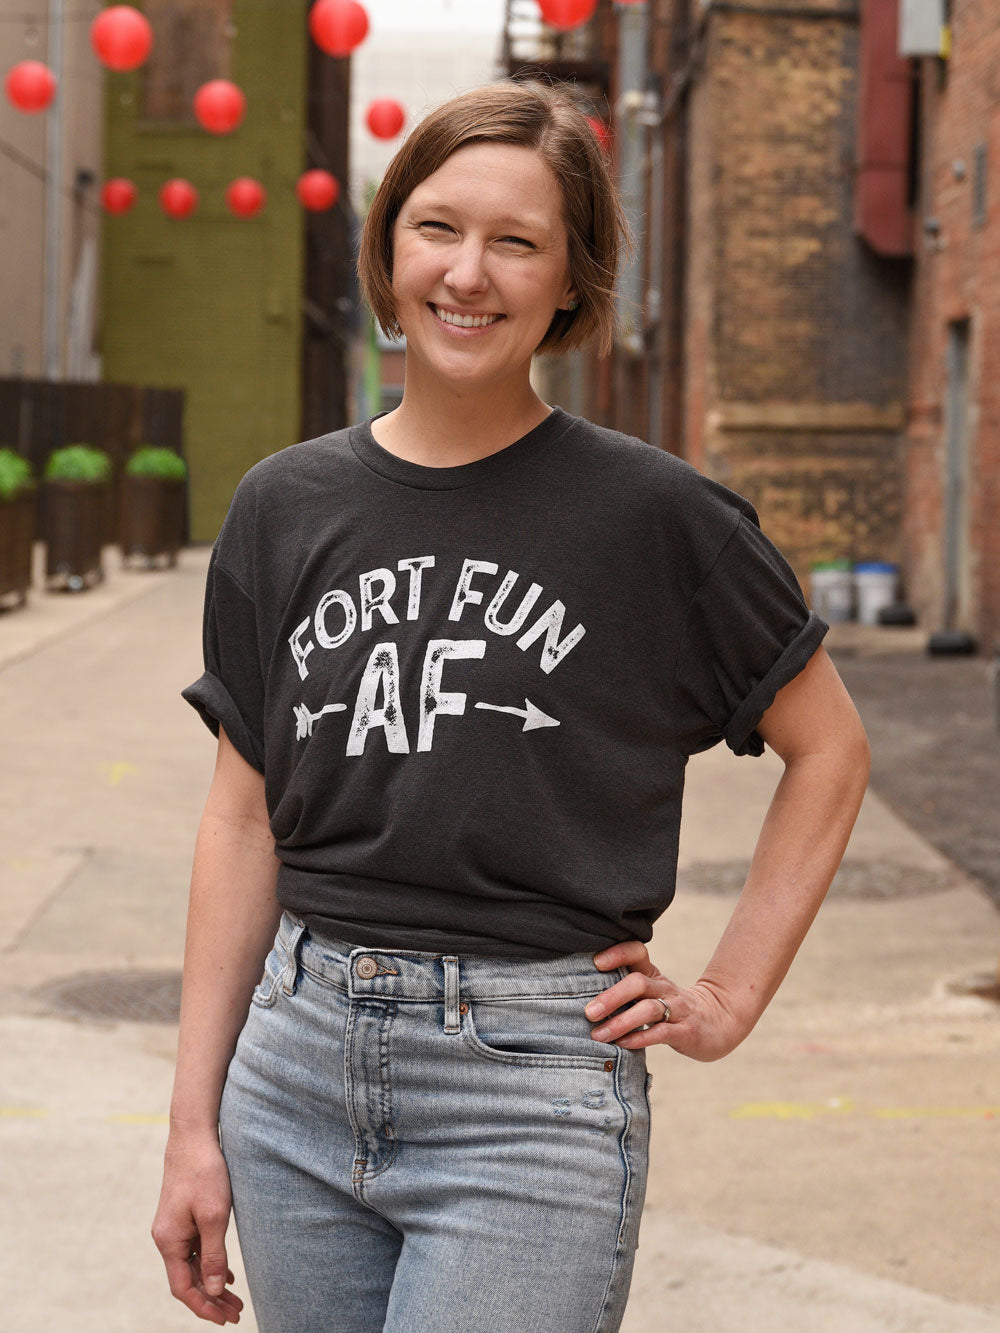 Fort Fun AF t-shirt on model by red paper lanterns